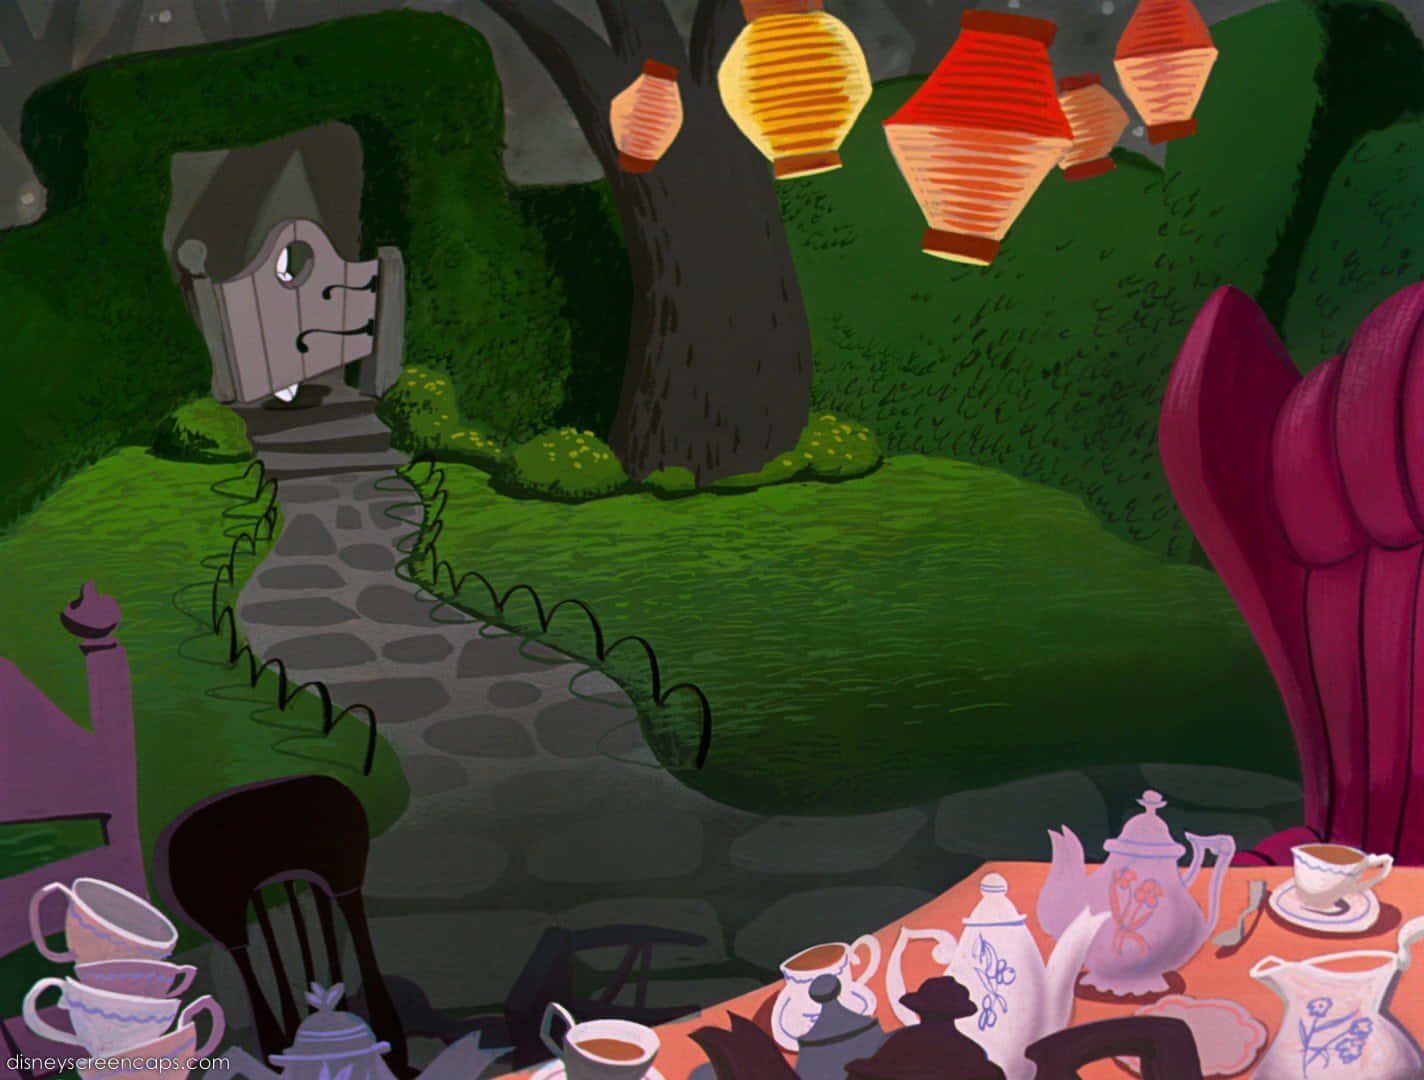 Alice in Wonderland explores the magical world of Wonderland